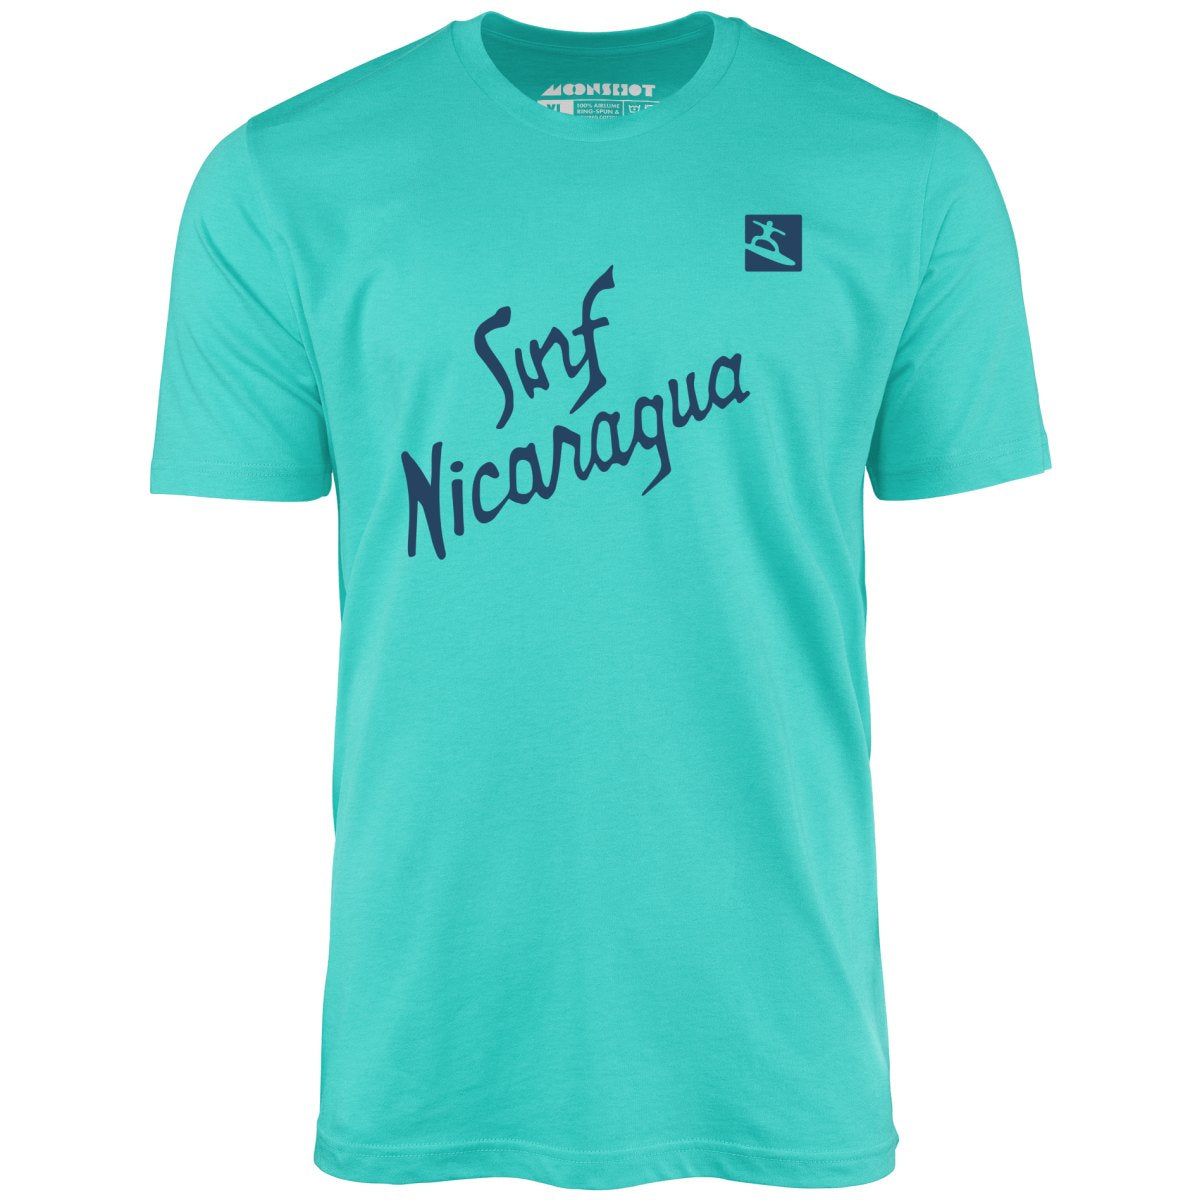 Real Genius - Surf Nicaragua - Unisex T-Shirt